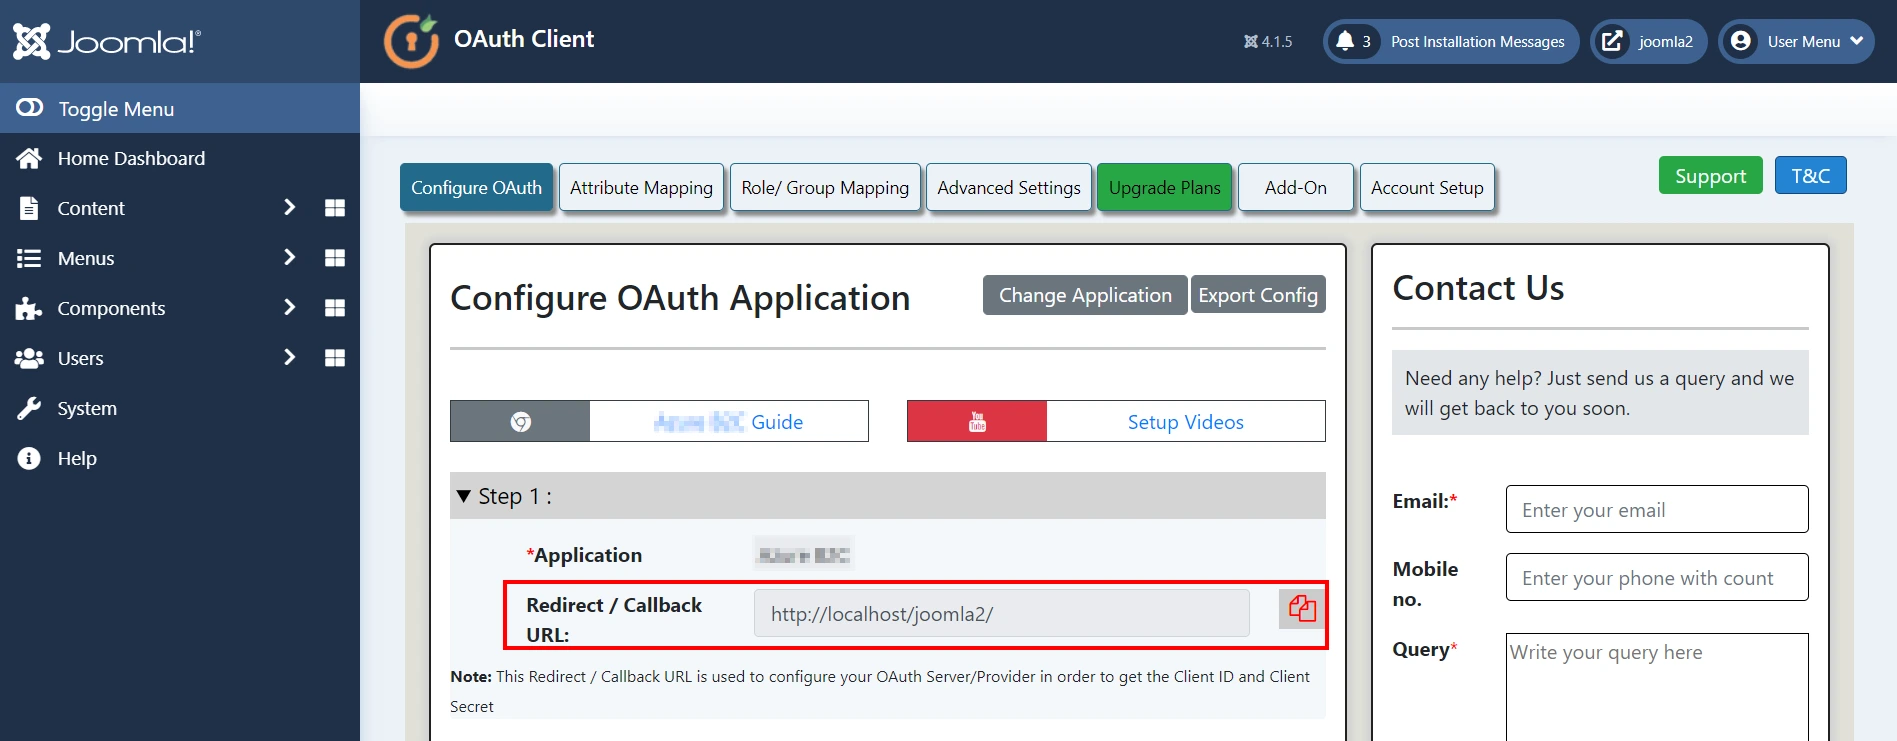  LinkedIn Single Sign-On (SSO) OAuth/OpenID